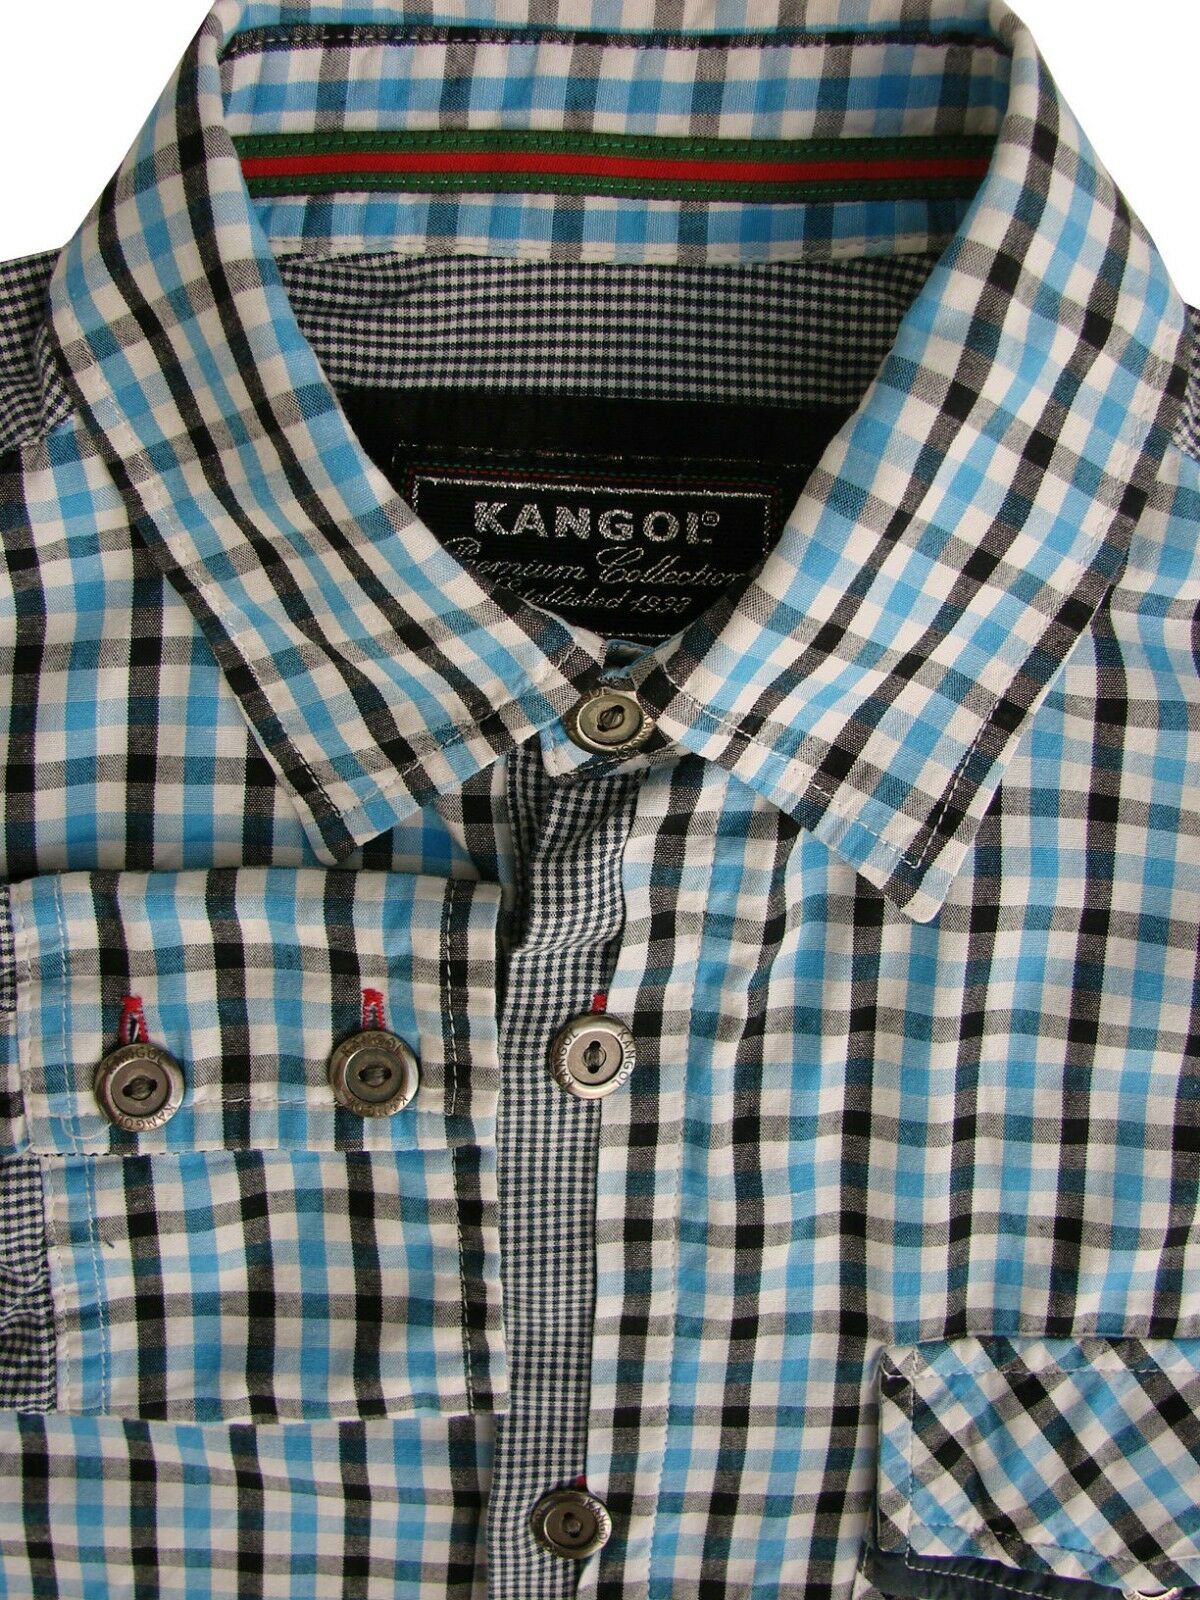 KANGOL Shirt Mens 15 S Black White & Blue Check - Black and Blue